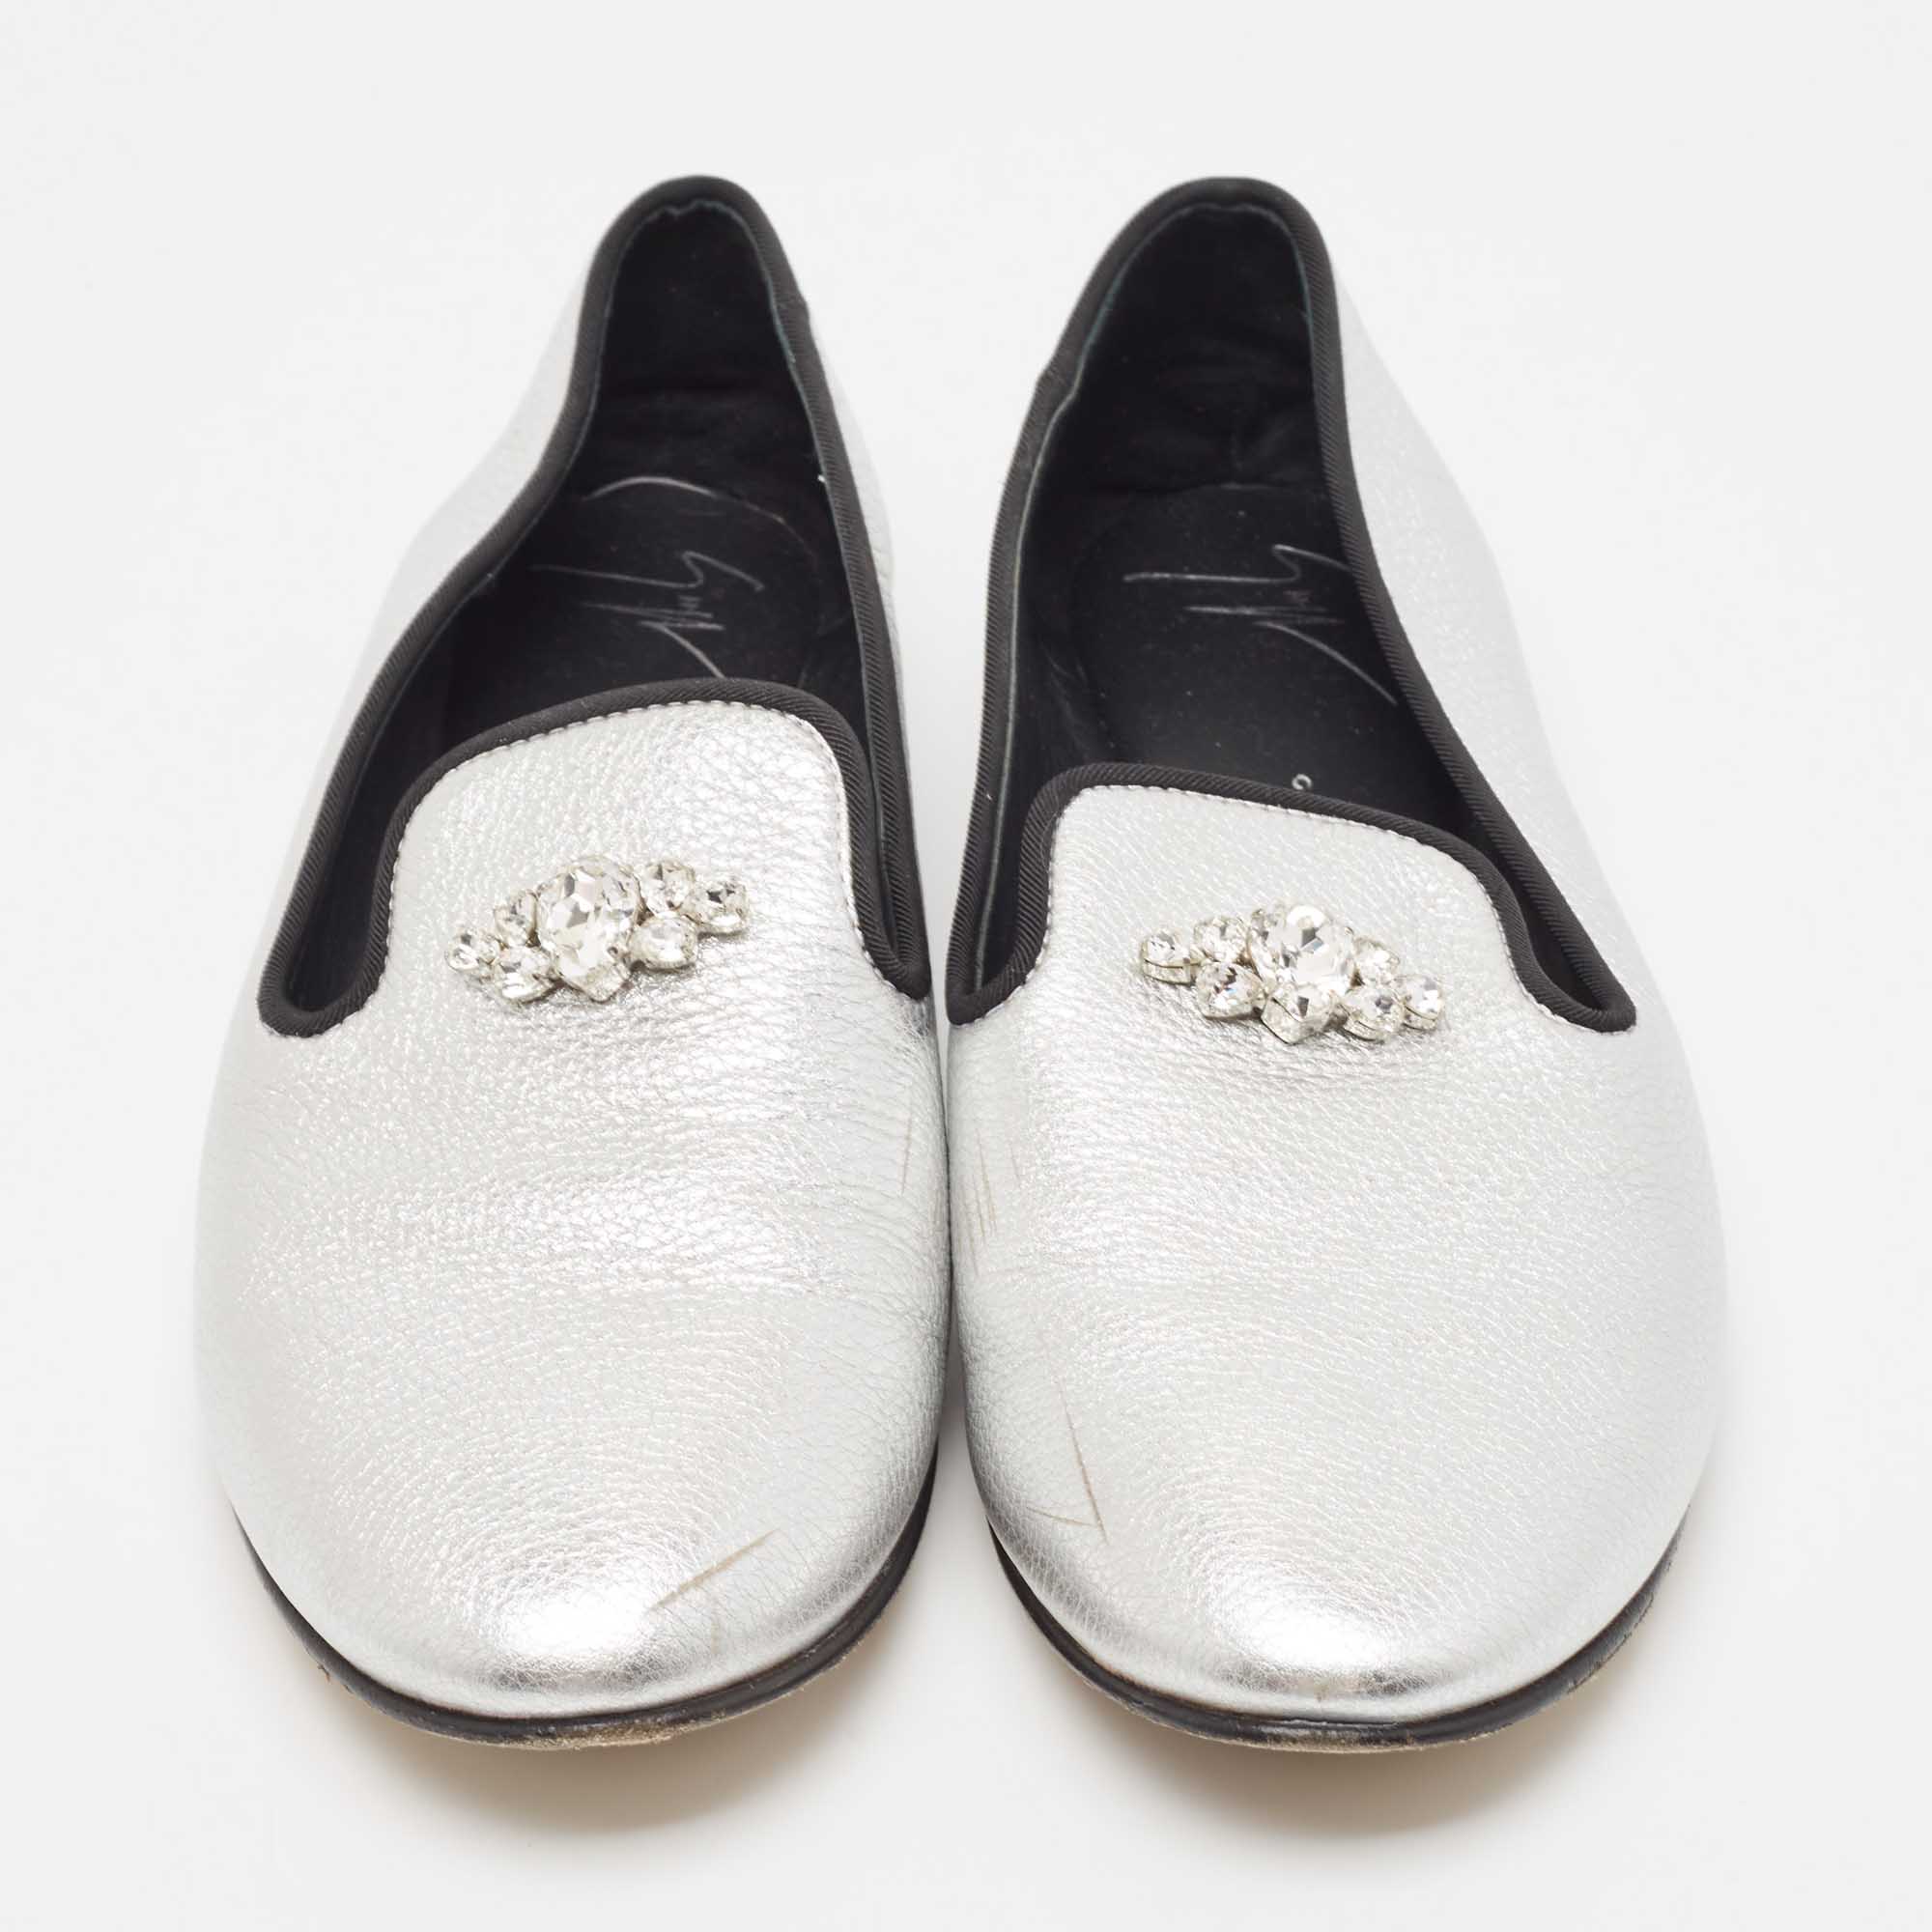 Giuseppe Zanotti Silver Leather Crystal Embellished Smoking Slippers Size 39